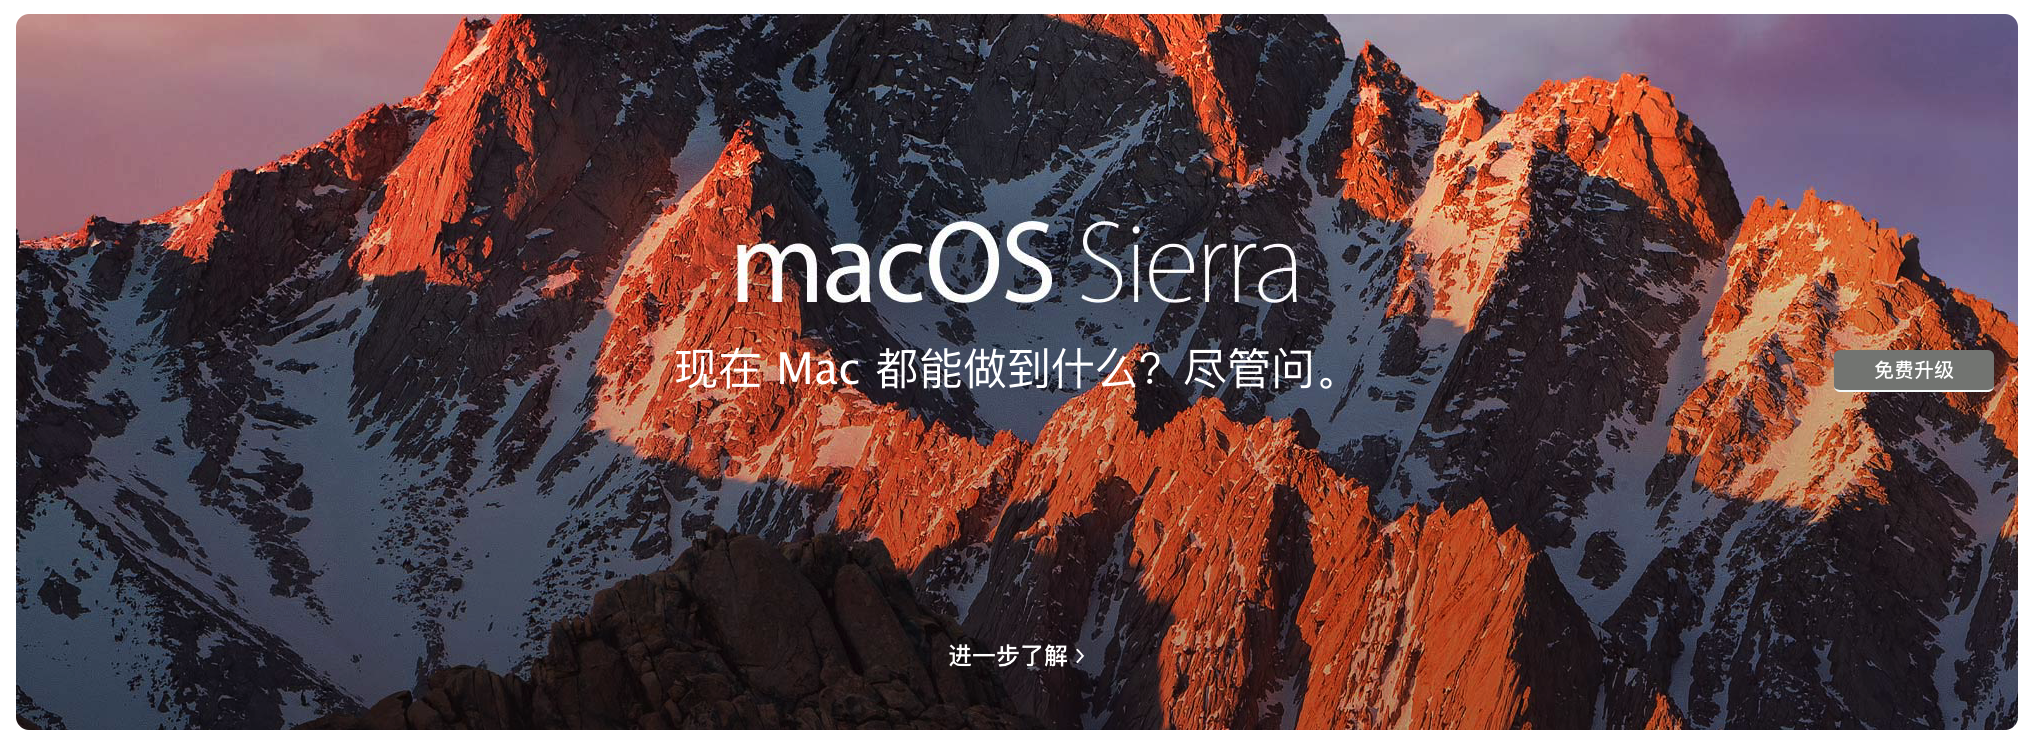 【记录】升级 Mac OS到macOS Sierra